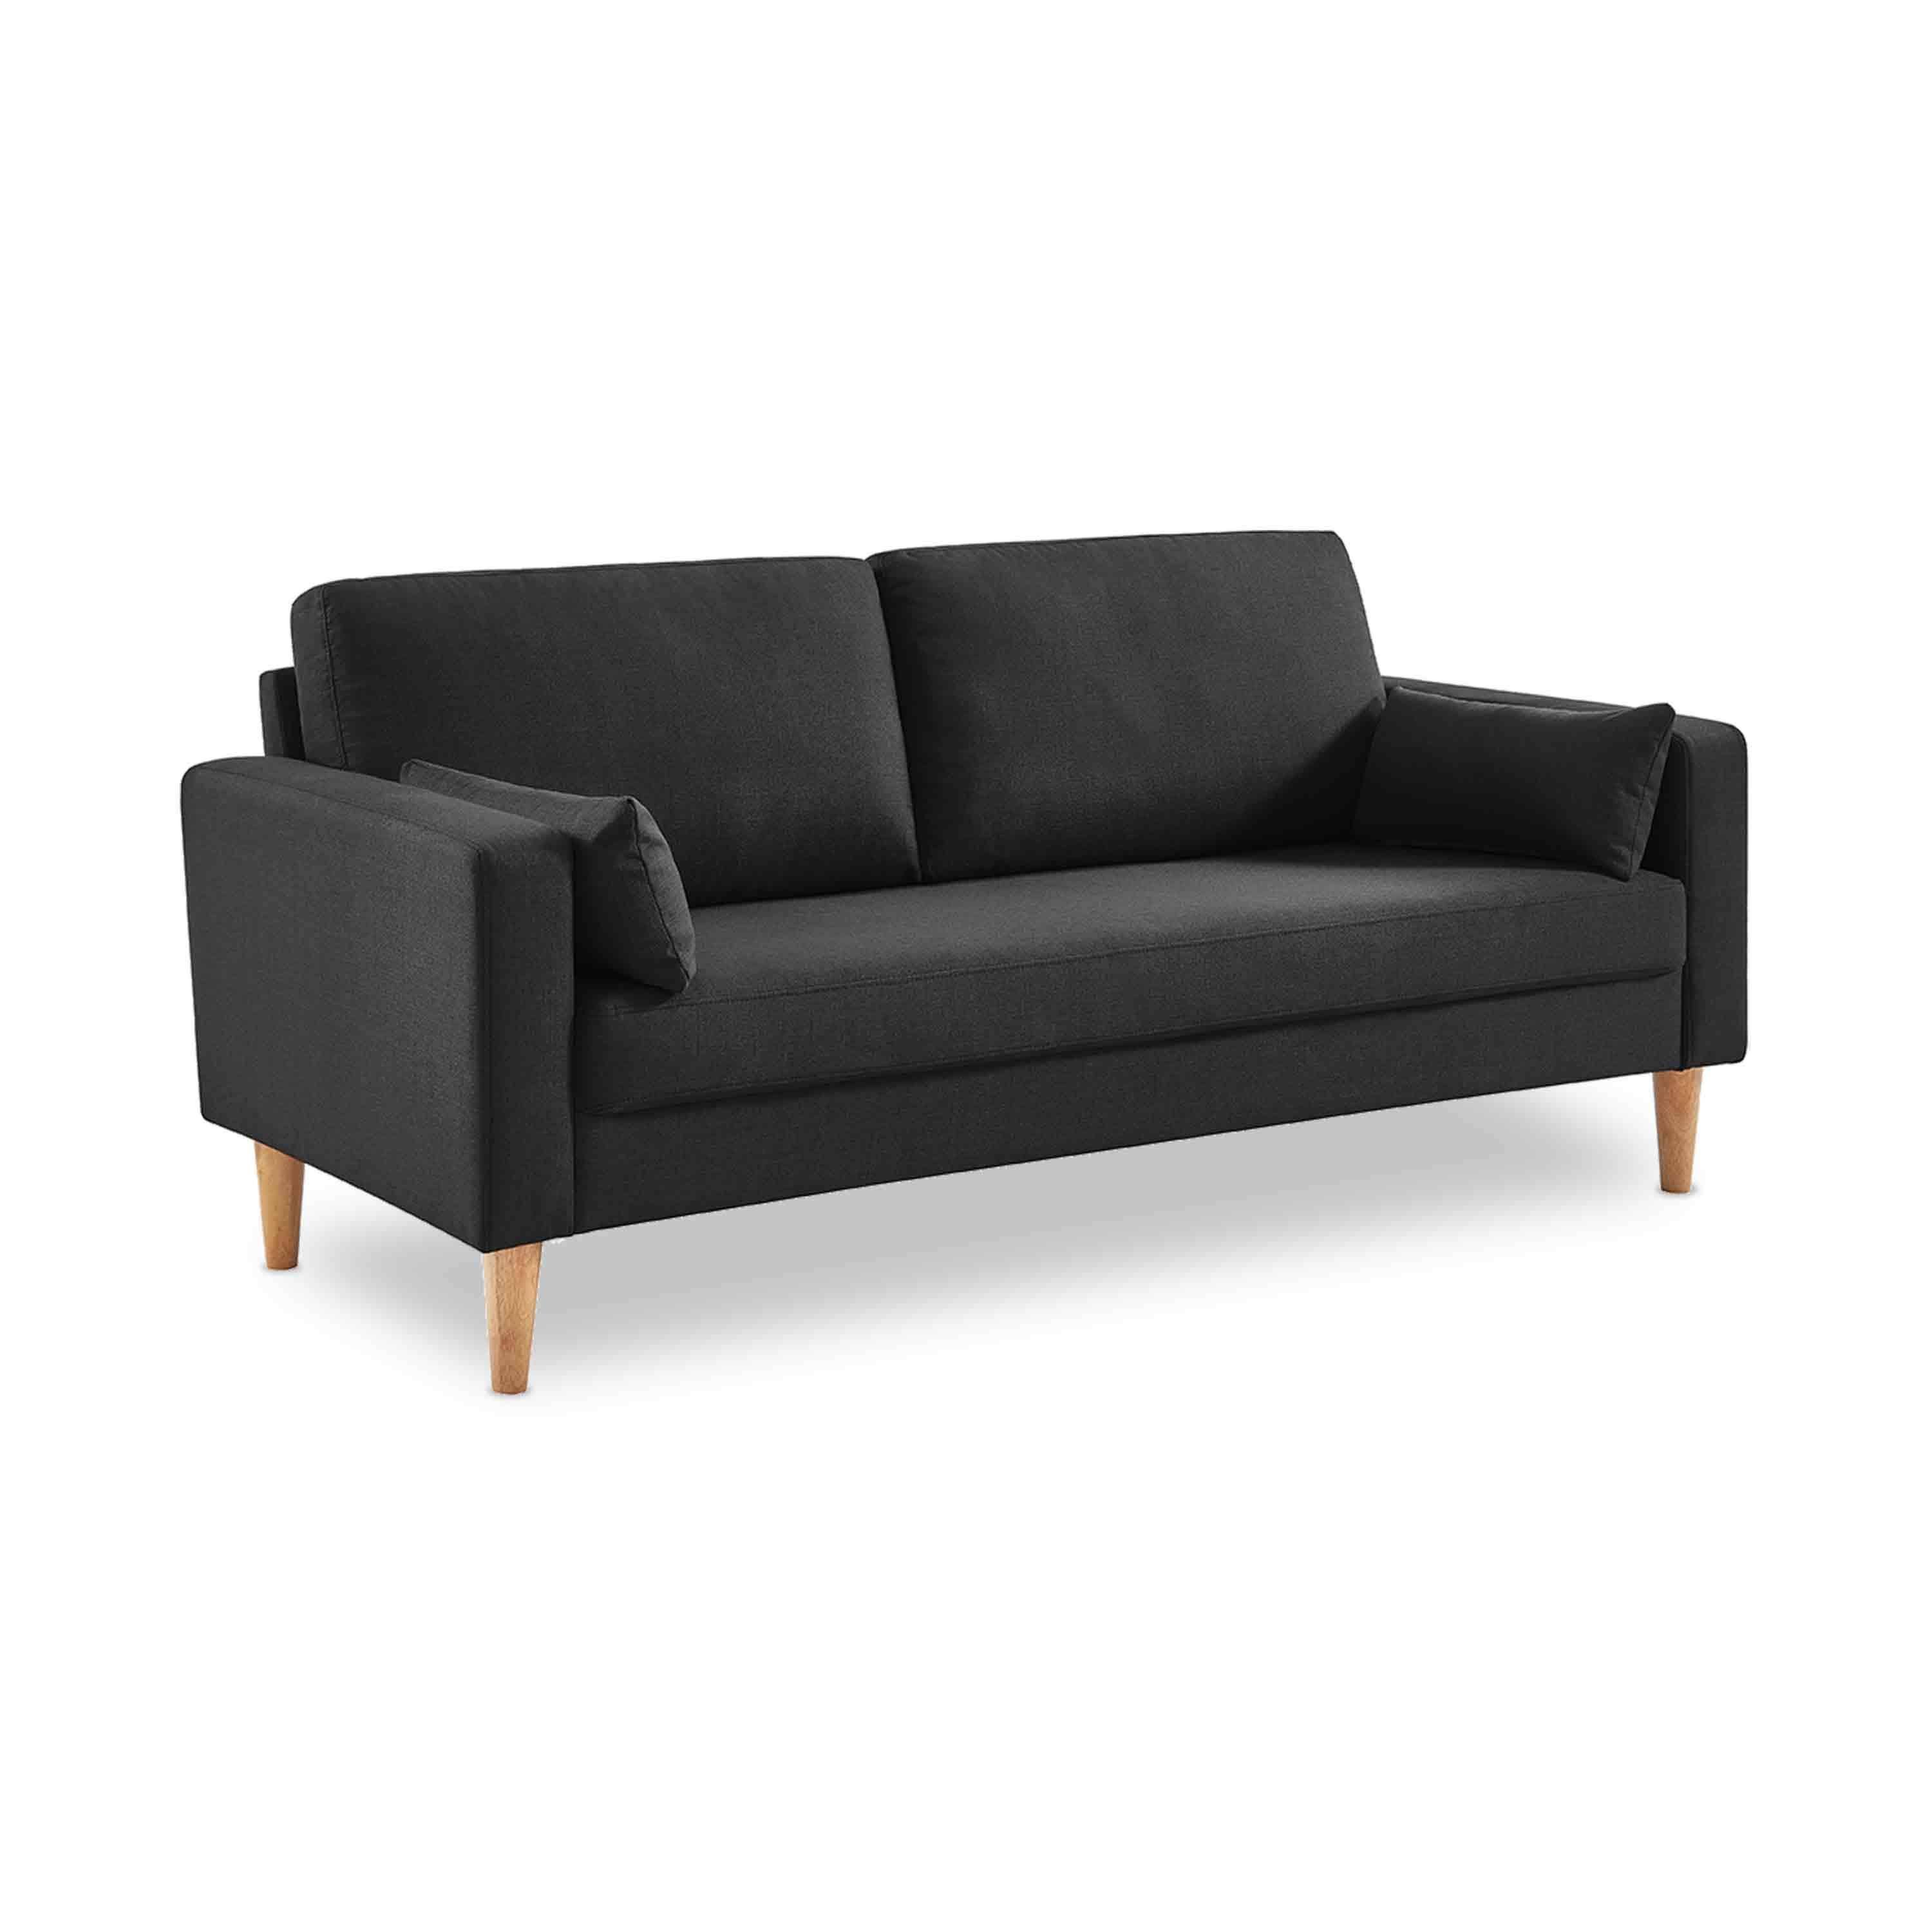 Large 3-seater sofa Scandi-style with wooden legs - Bjorn - Dark Grey,sweeek,Photo2